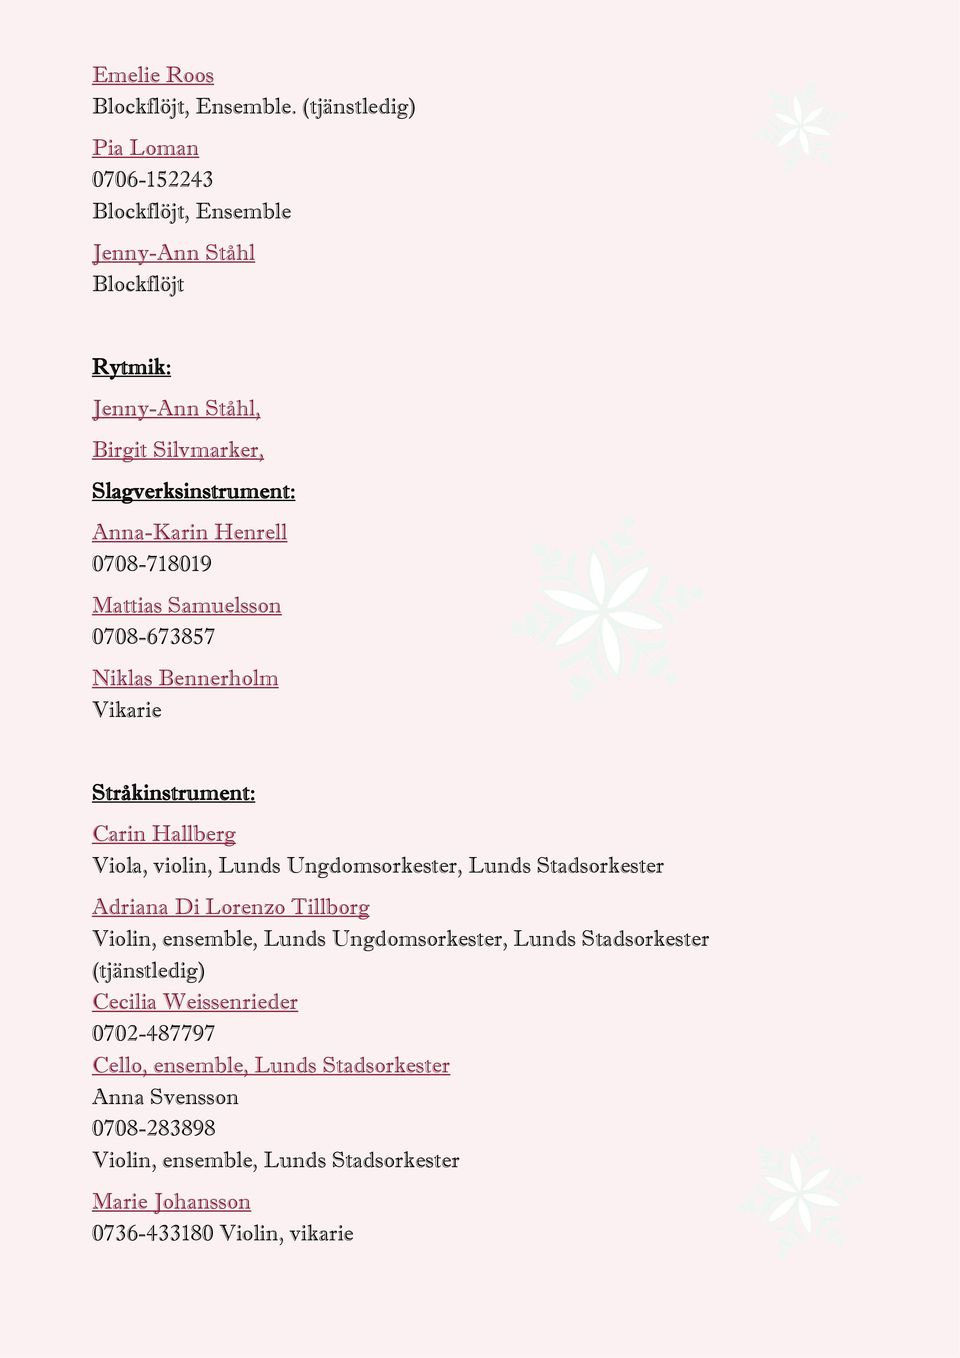 Henrell 0708-718019 Mattias Samuelsson 0708-673857 Niklas Bennerholm Vikarie Stråkinstrument: Carin Hallberg Viola, violin, Lunds Ungdomsorkester, Lunds